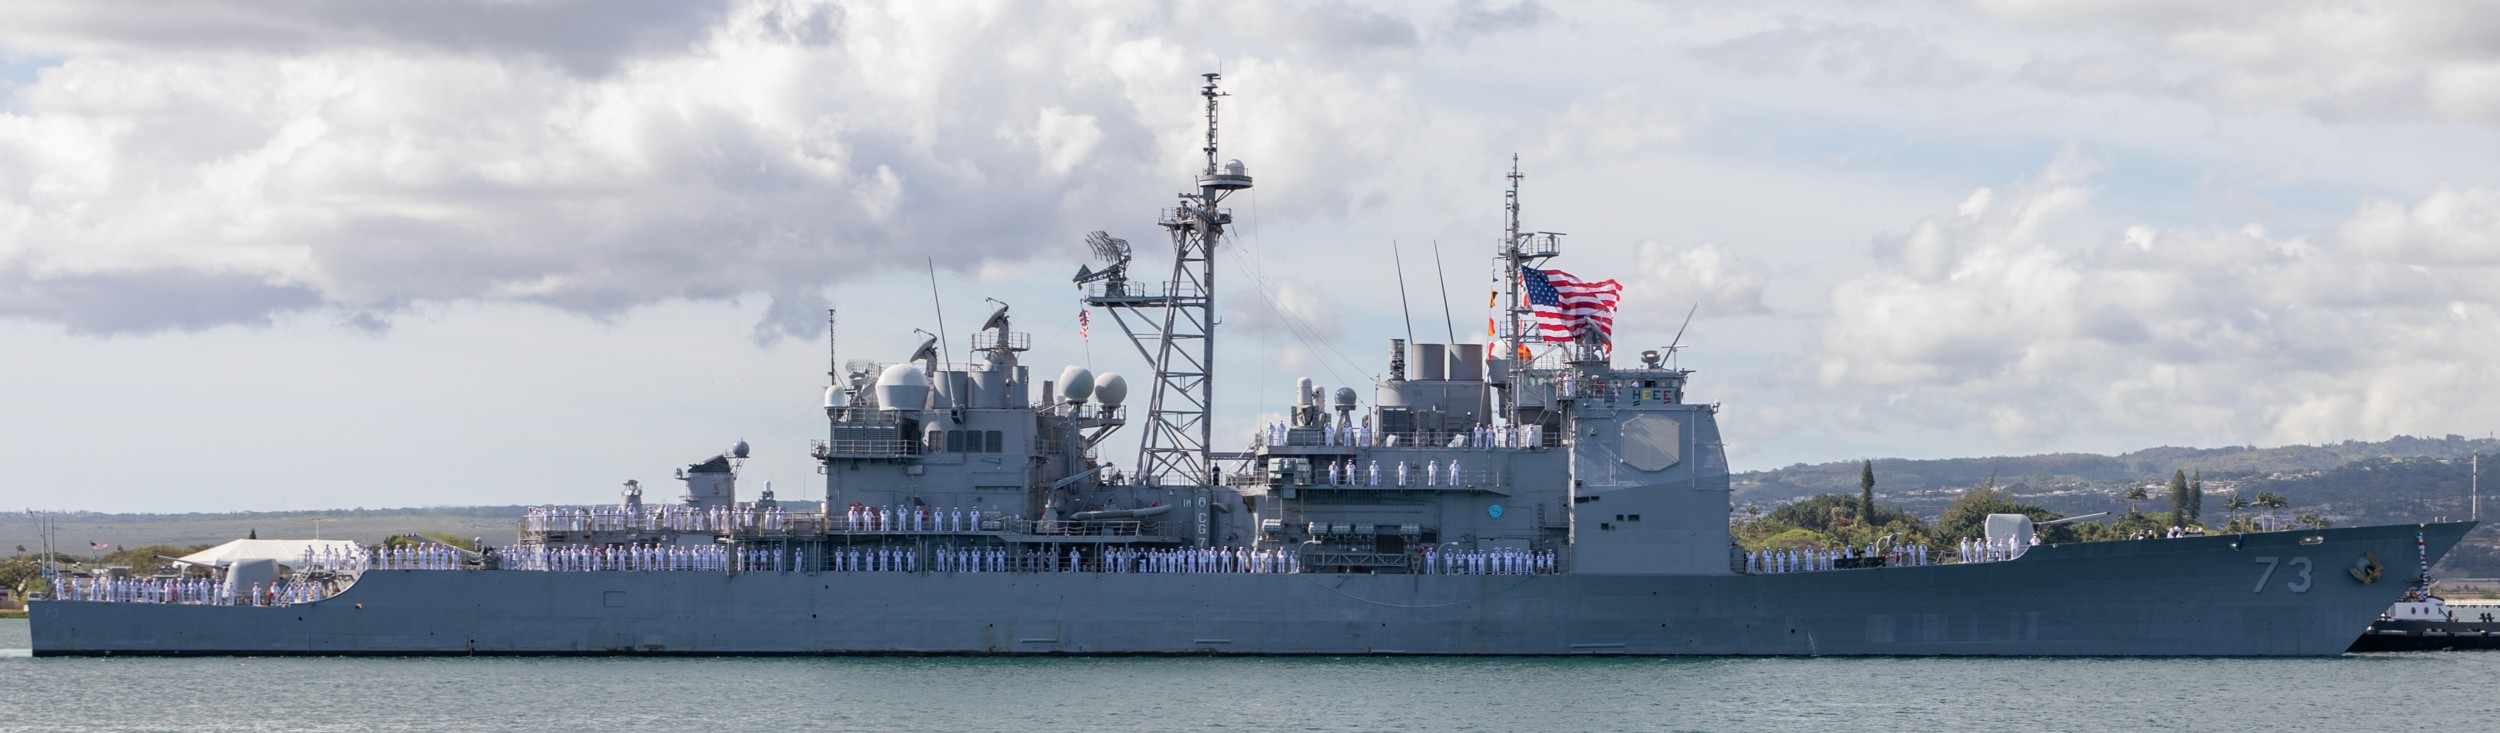 cg-73 uss port royal ticonderoga class guided missile cruiser navy joint base pearl harbor hickam hawaii 65